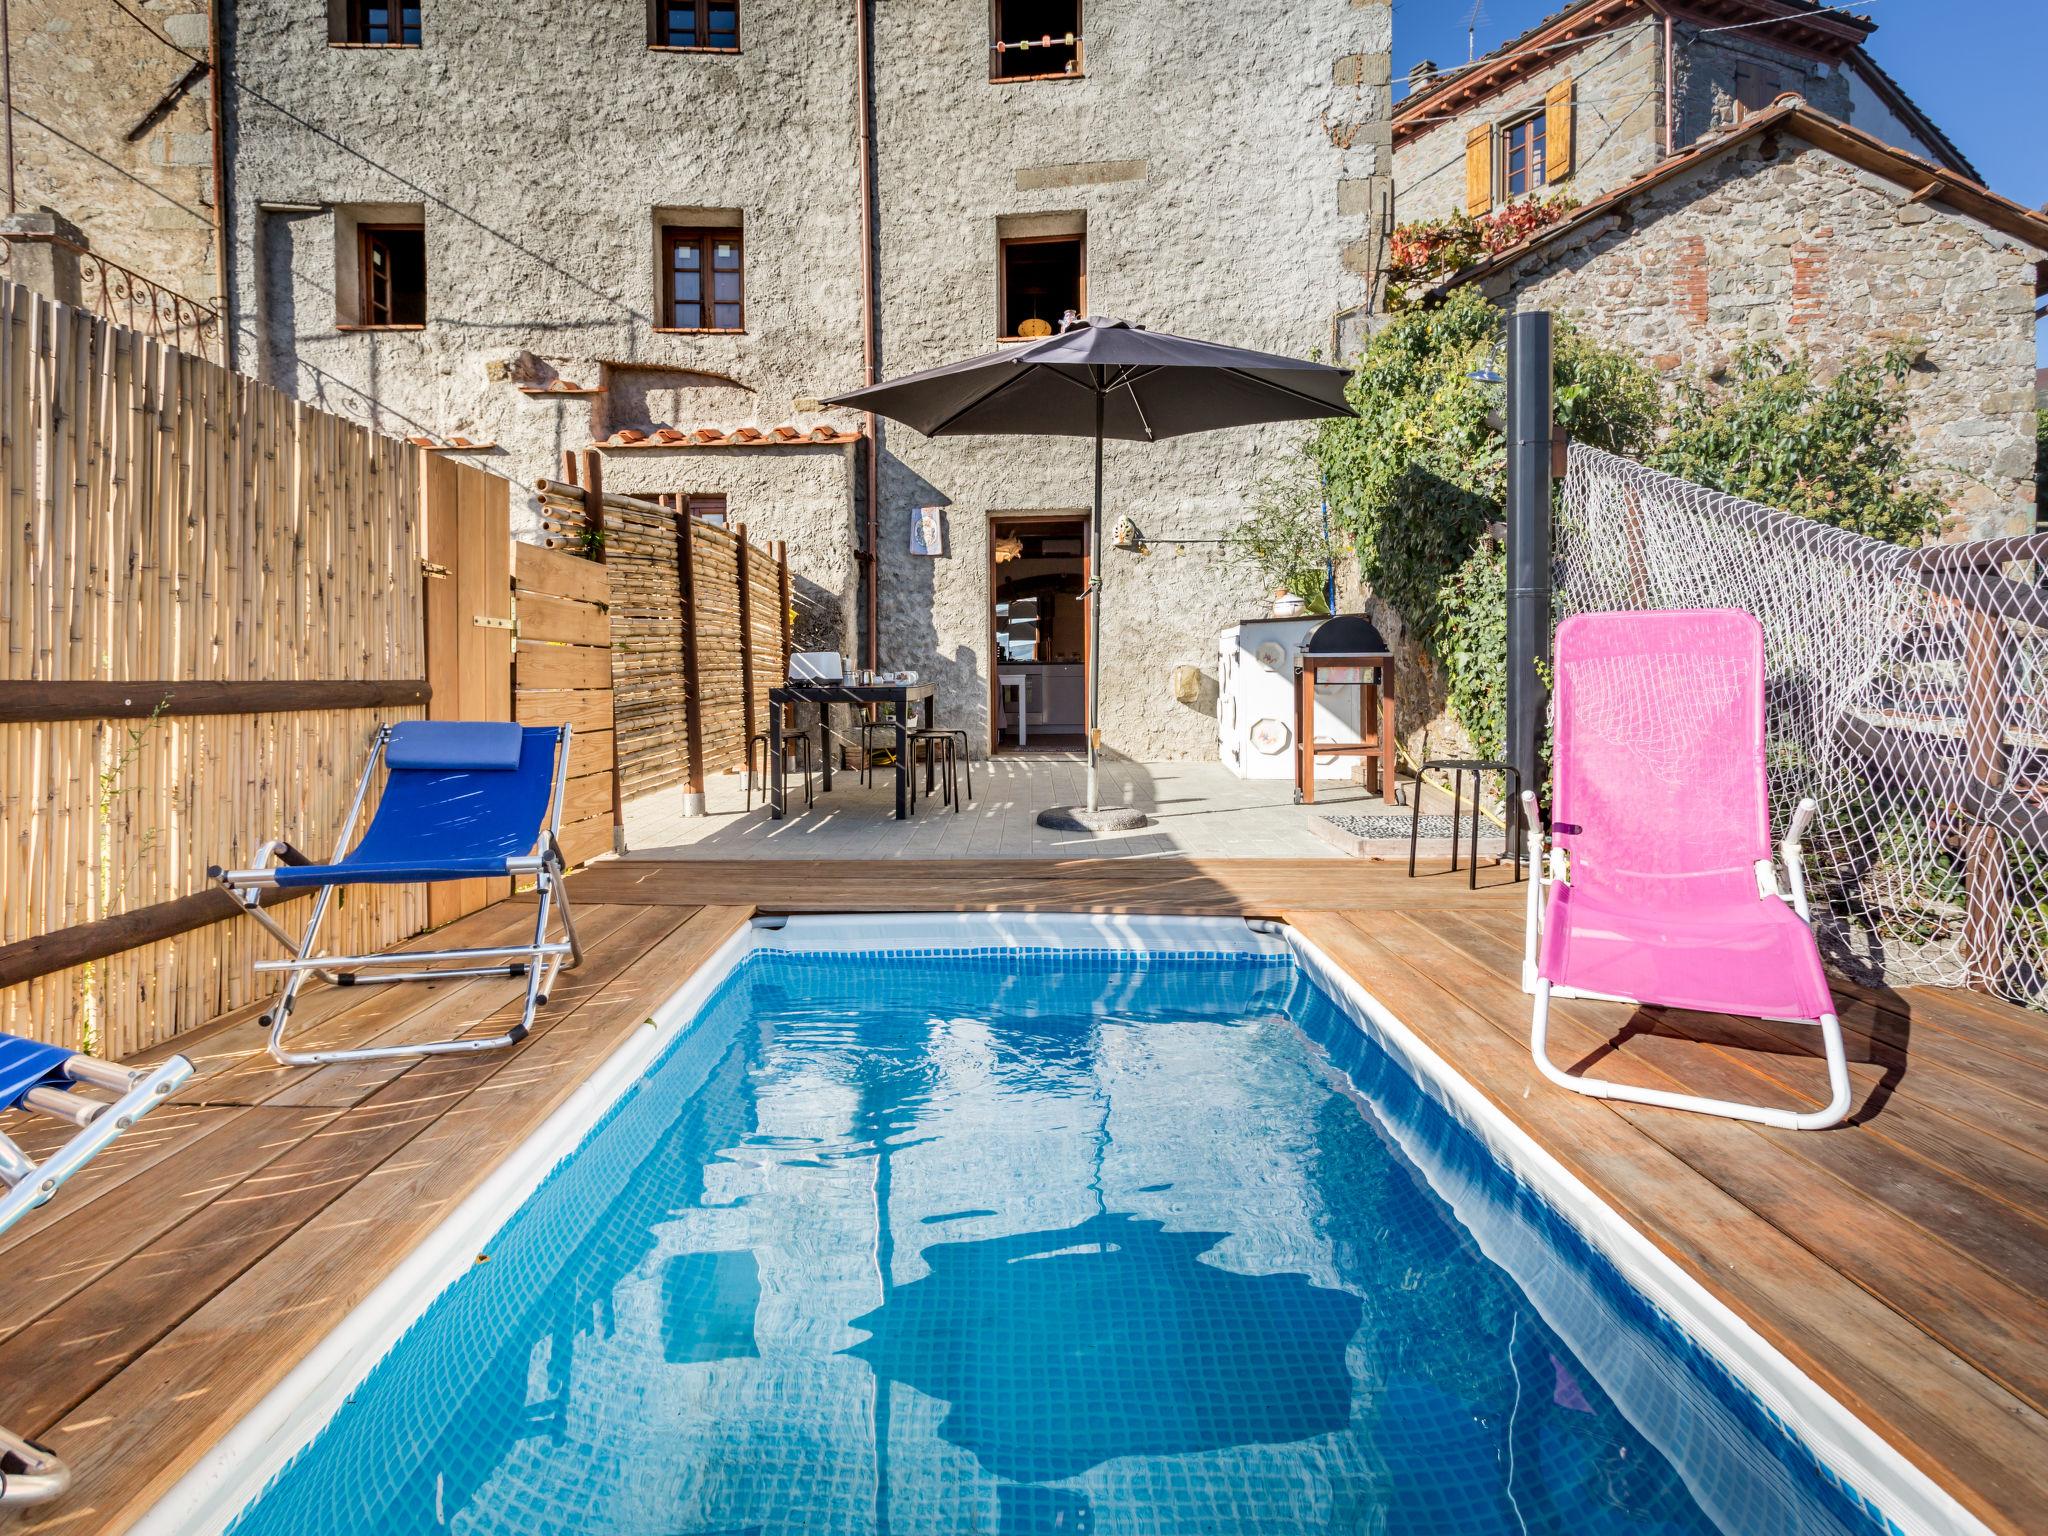 Foto 1 - Haus mit 2 Schlafzimmern in Bagni di Lucca mit privater pool und terrasse